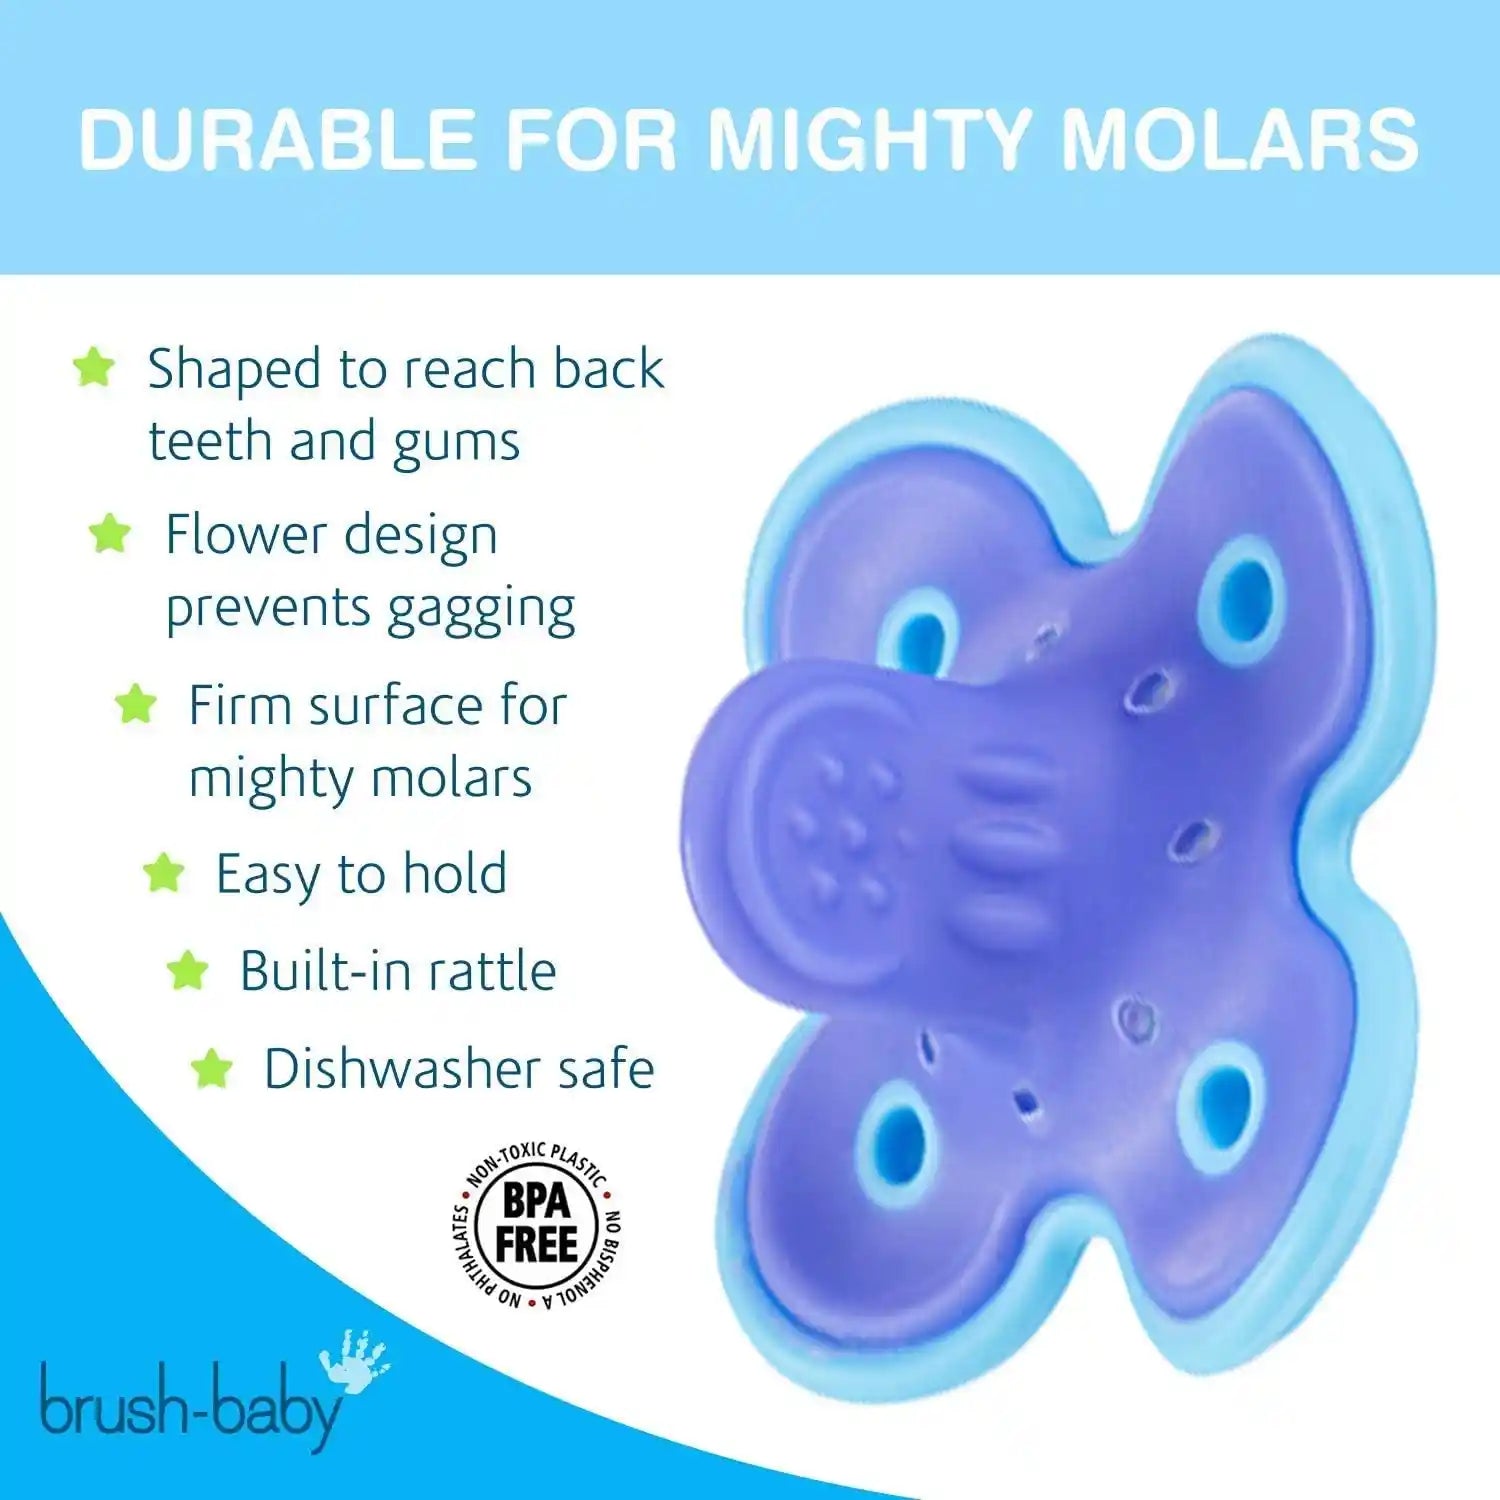 Brush-Baby Molarmunch X 2 Teether (Blue/Purple)